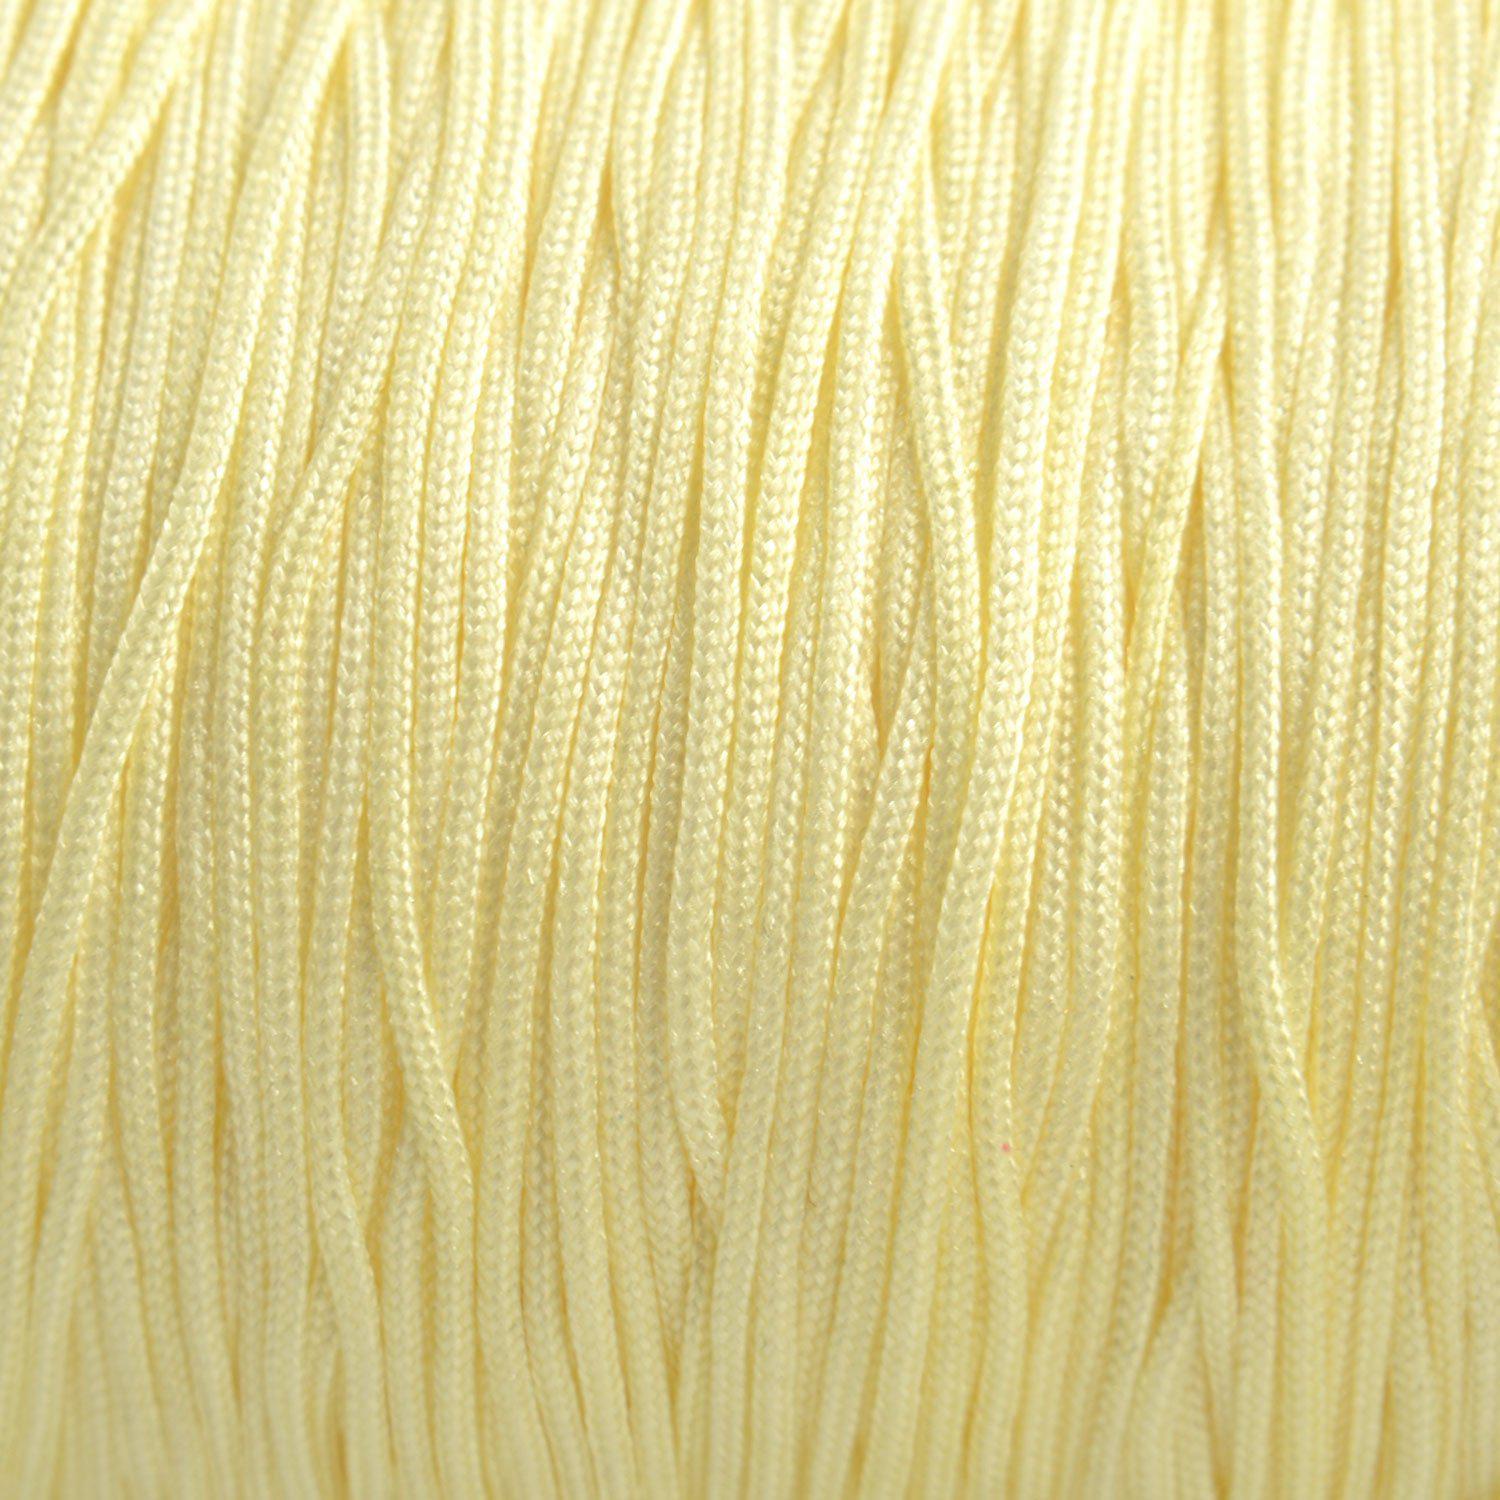 Nylon koord cream white 0.8mm - 6 meter-Kraaltjes van Renate